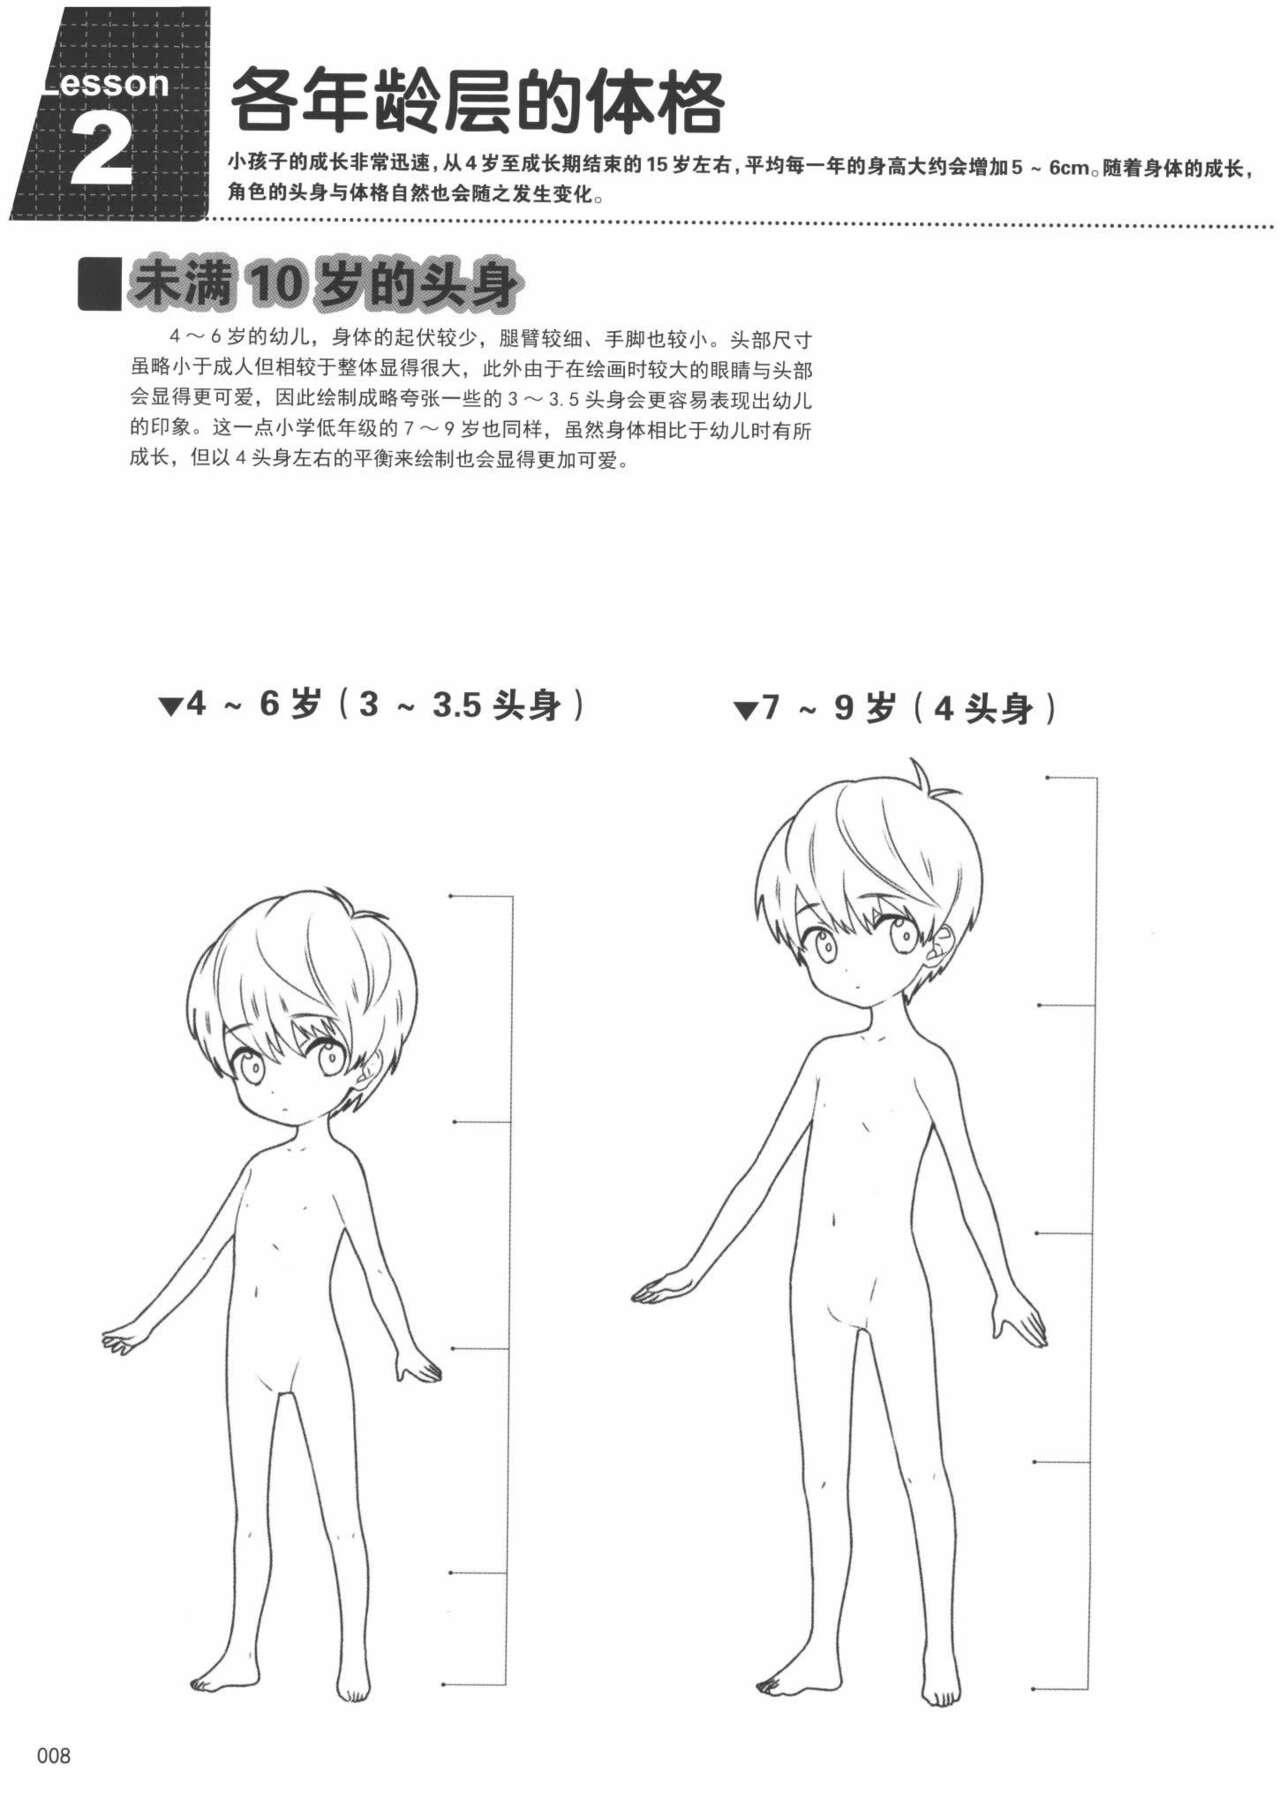 How to draw a boy 7